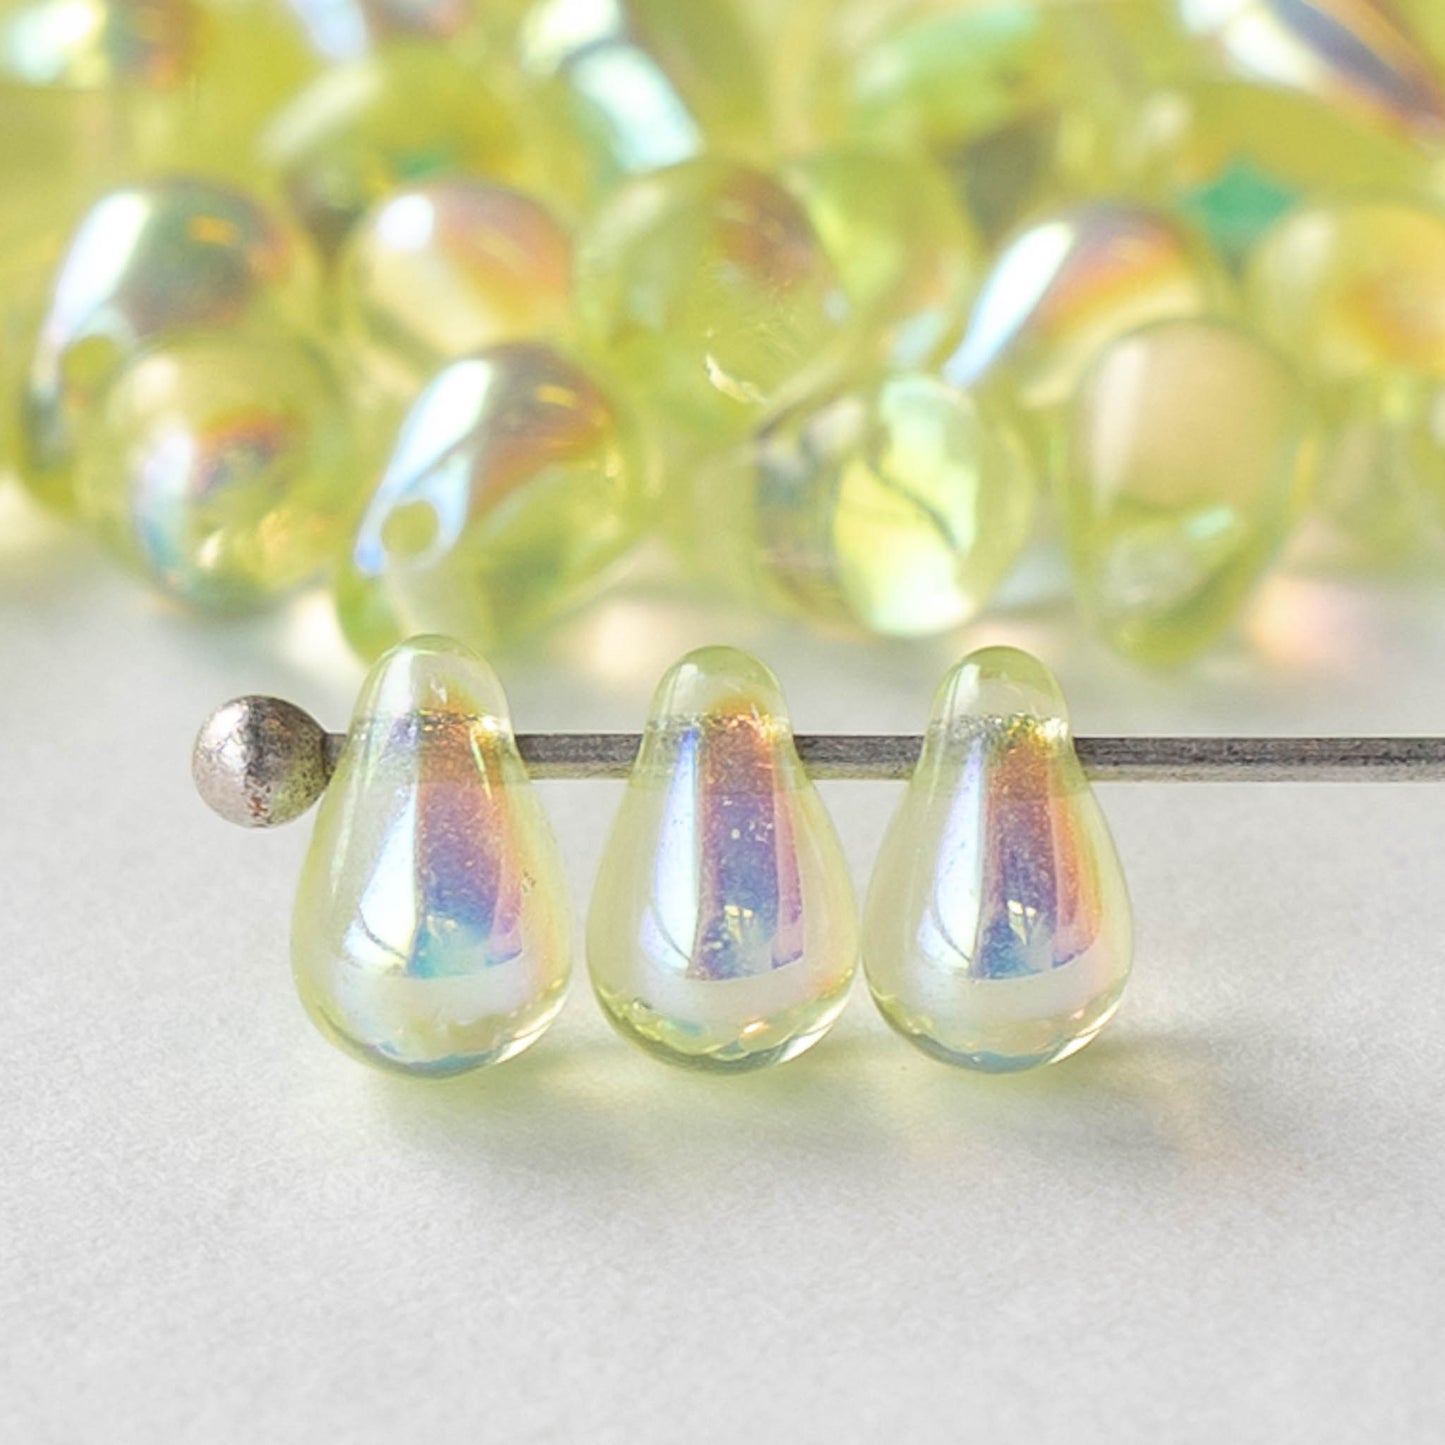 4x6mm Glass Teardrop Beads - Jonquil Yellow AB - 100 Beads